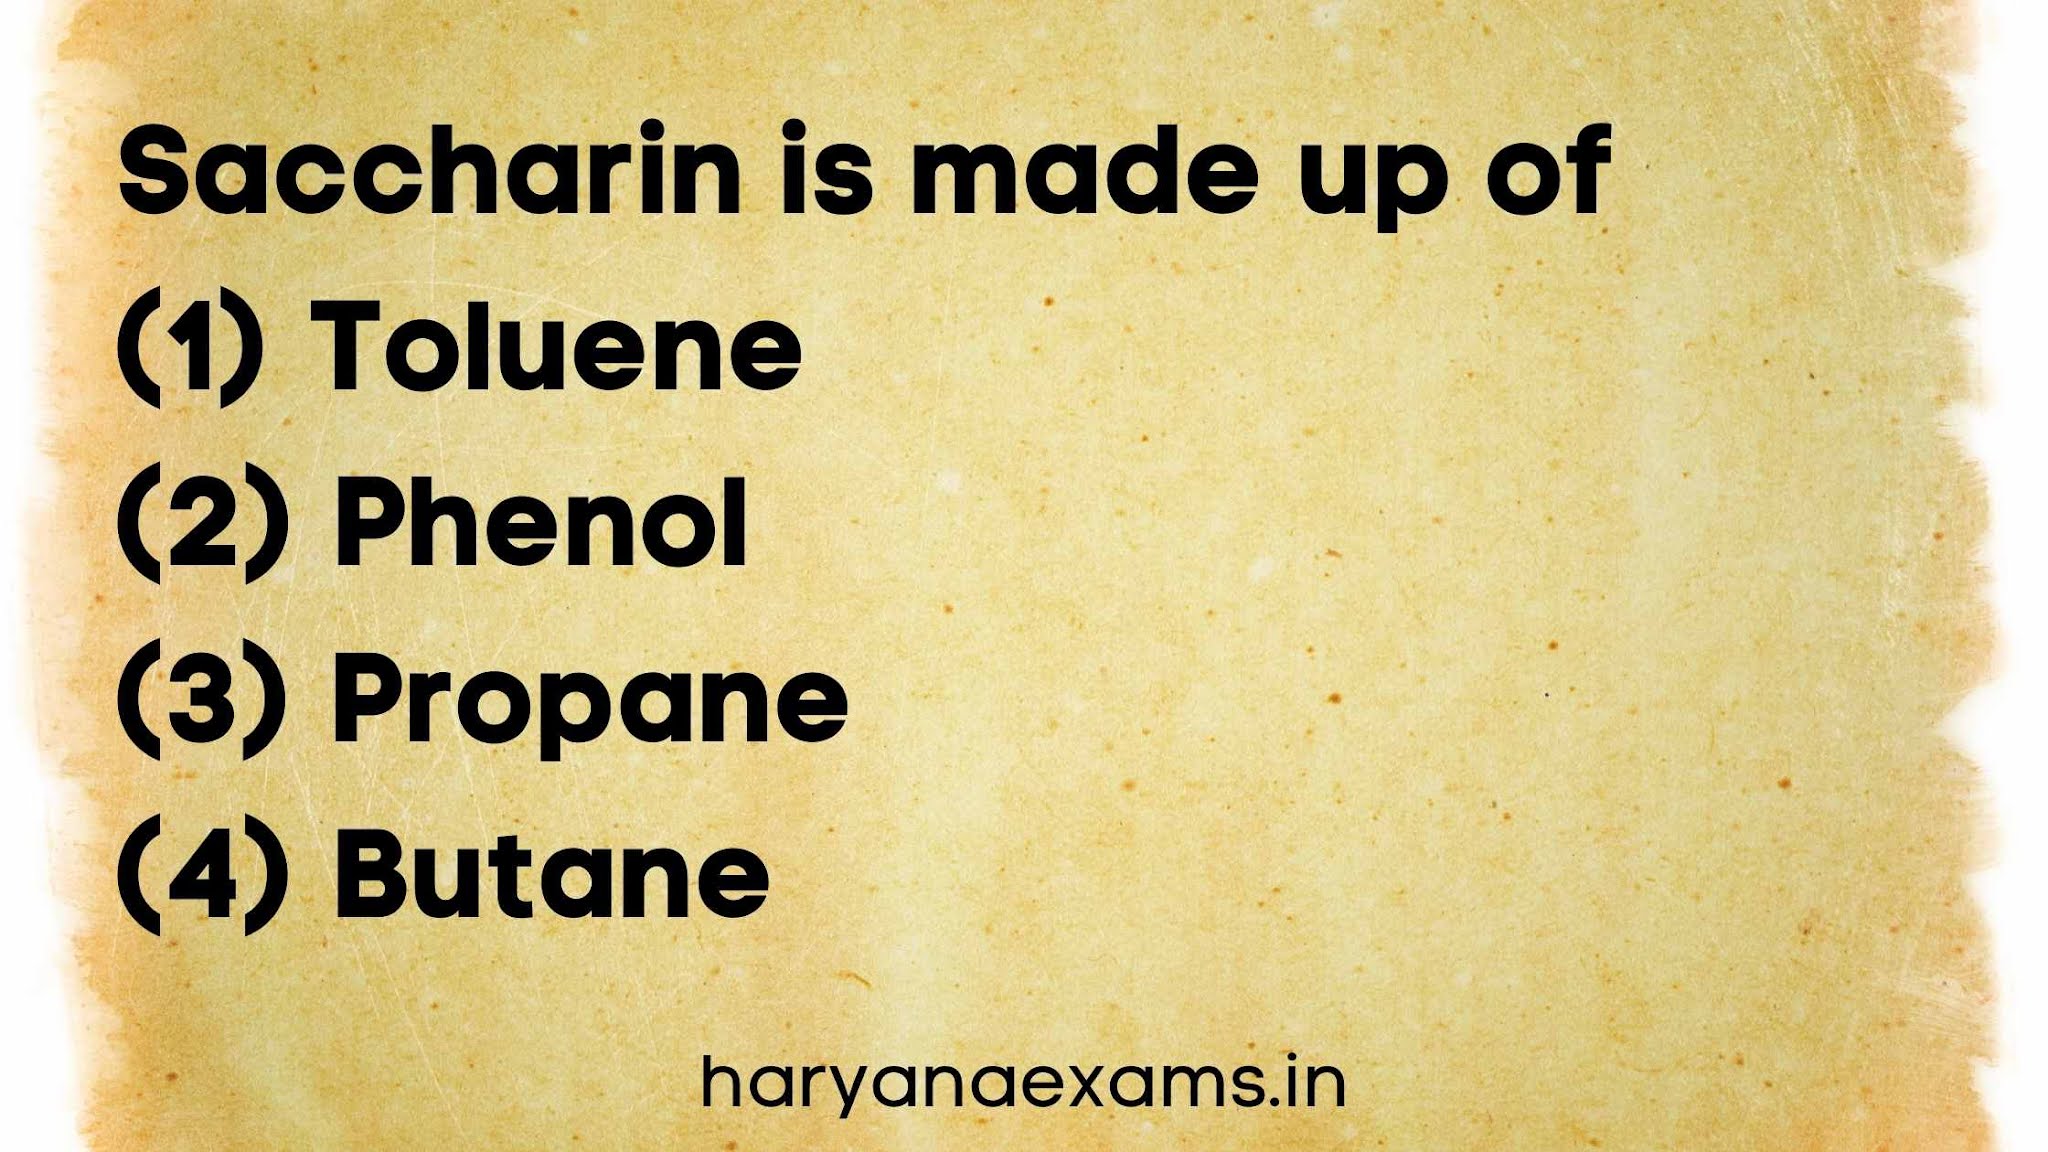 Saccharin is made up of   (1) Toluene   (2) Phenol   (3) Propane   (4) Butane